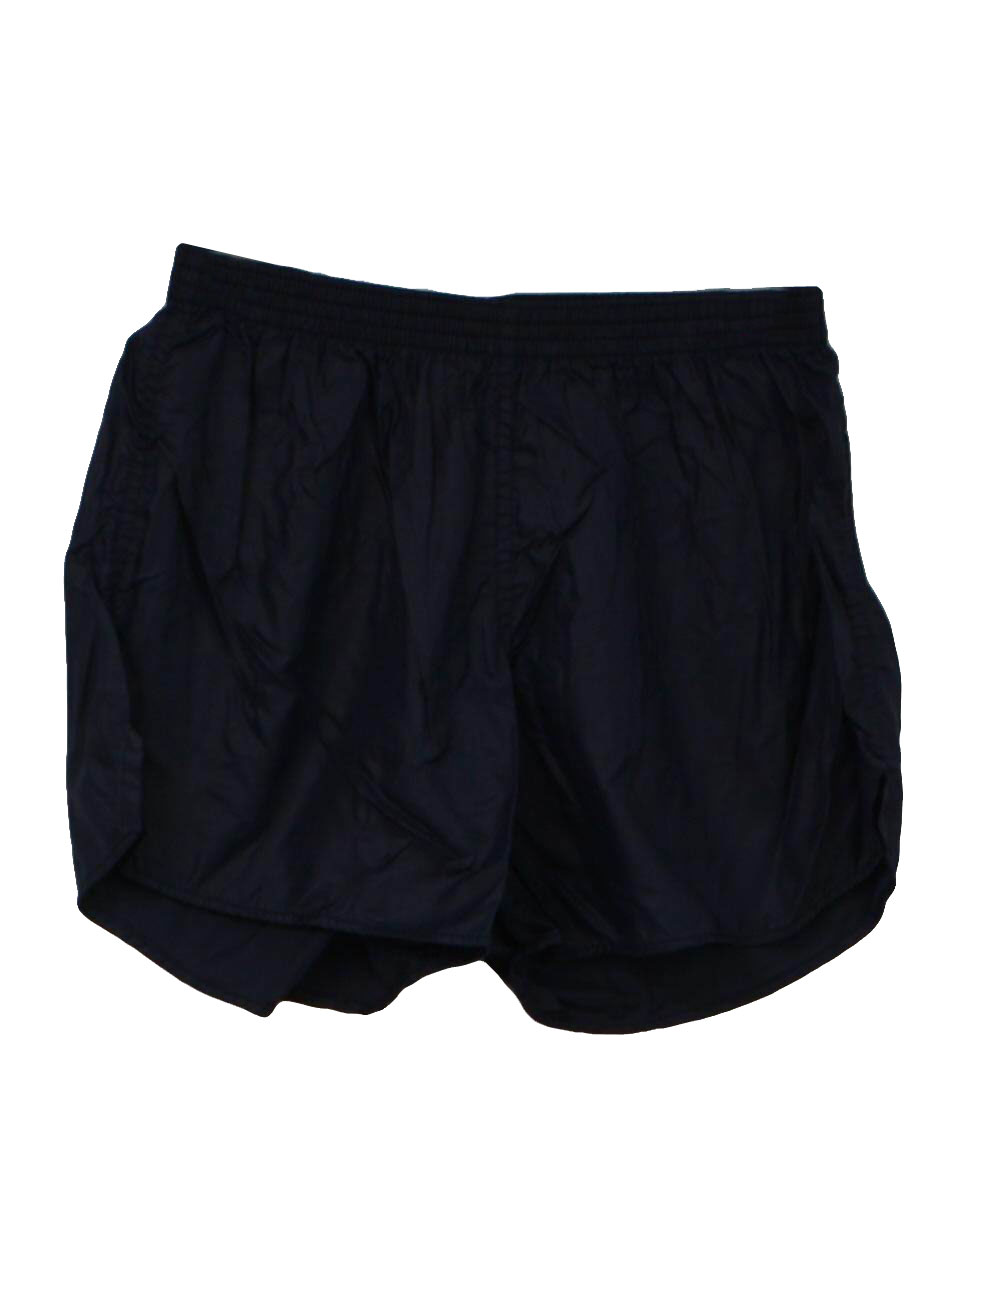 Retro 80's Shorts: 80s -Soffe Shorts- Mens midnight blue background ...